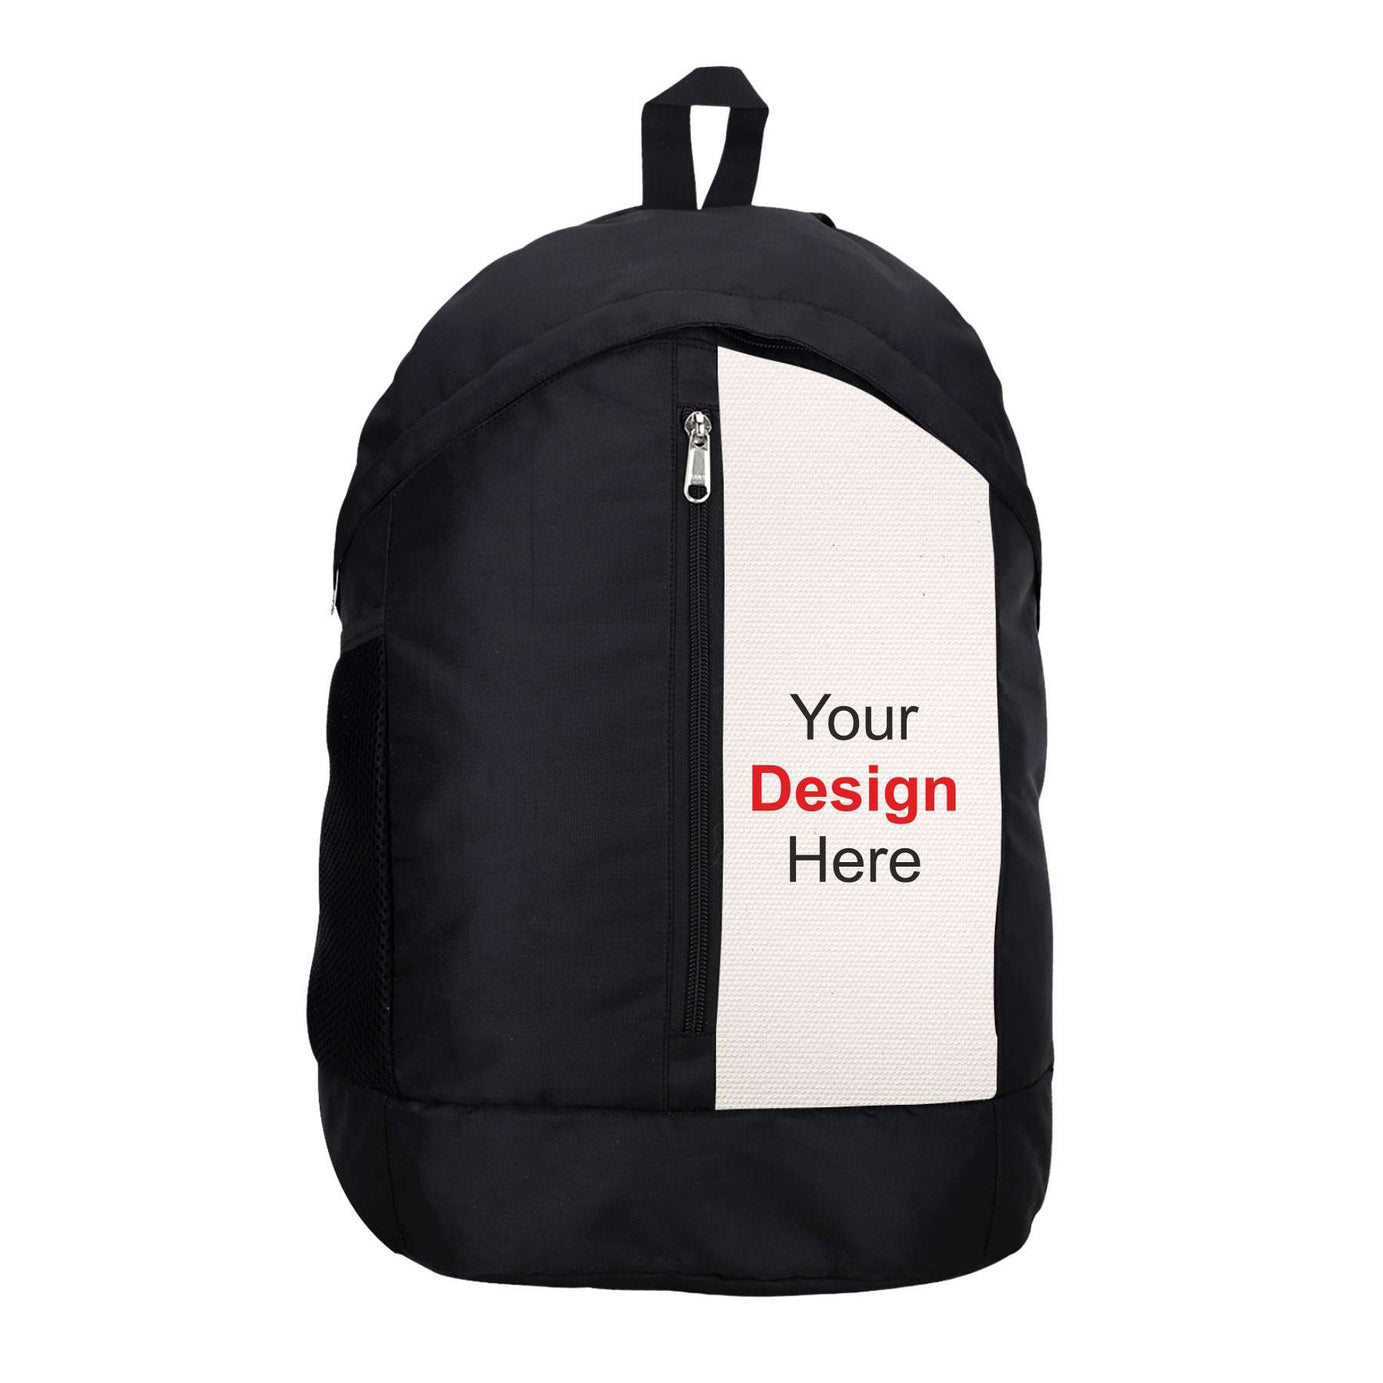 My Fav Personalized/ Customized Print 21 L Black Laptop Backpack for Men Women / College Bag for Boys Girls / Office Bag